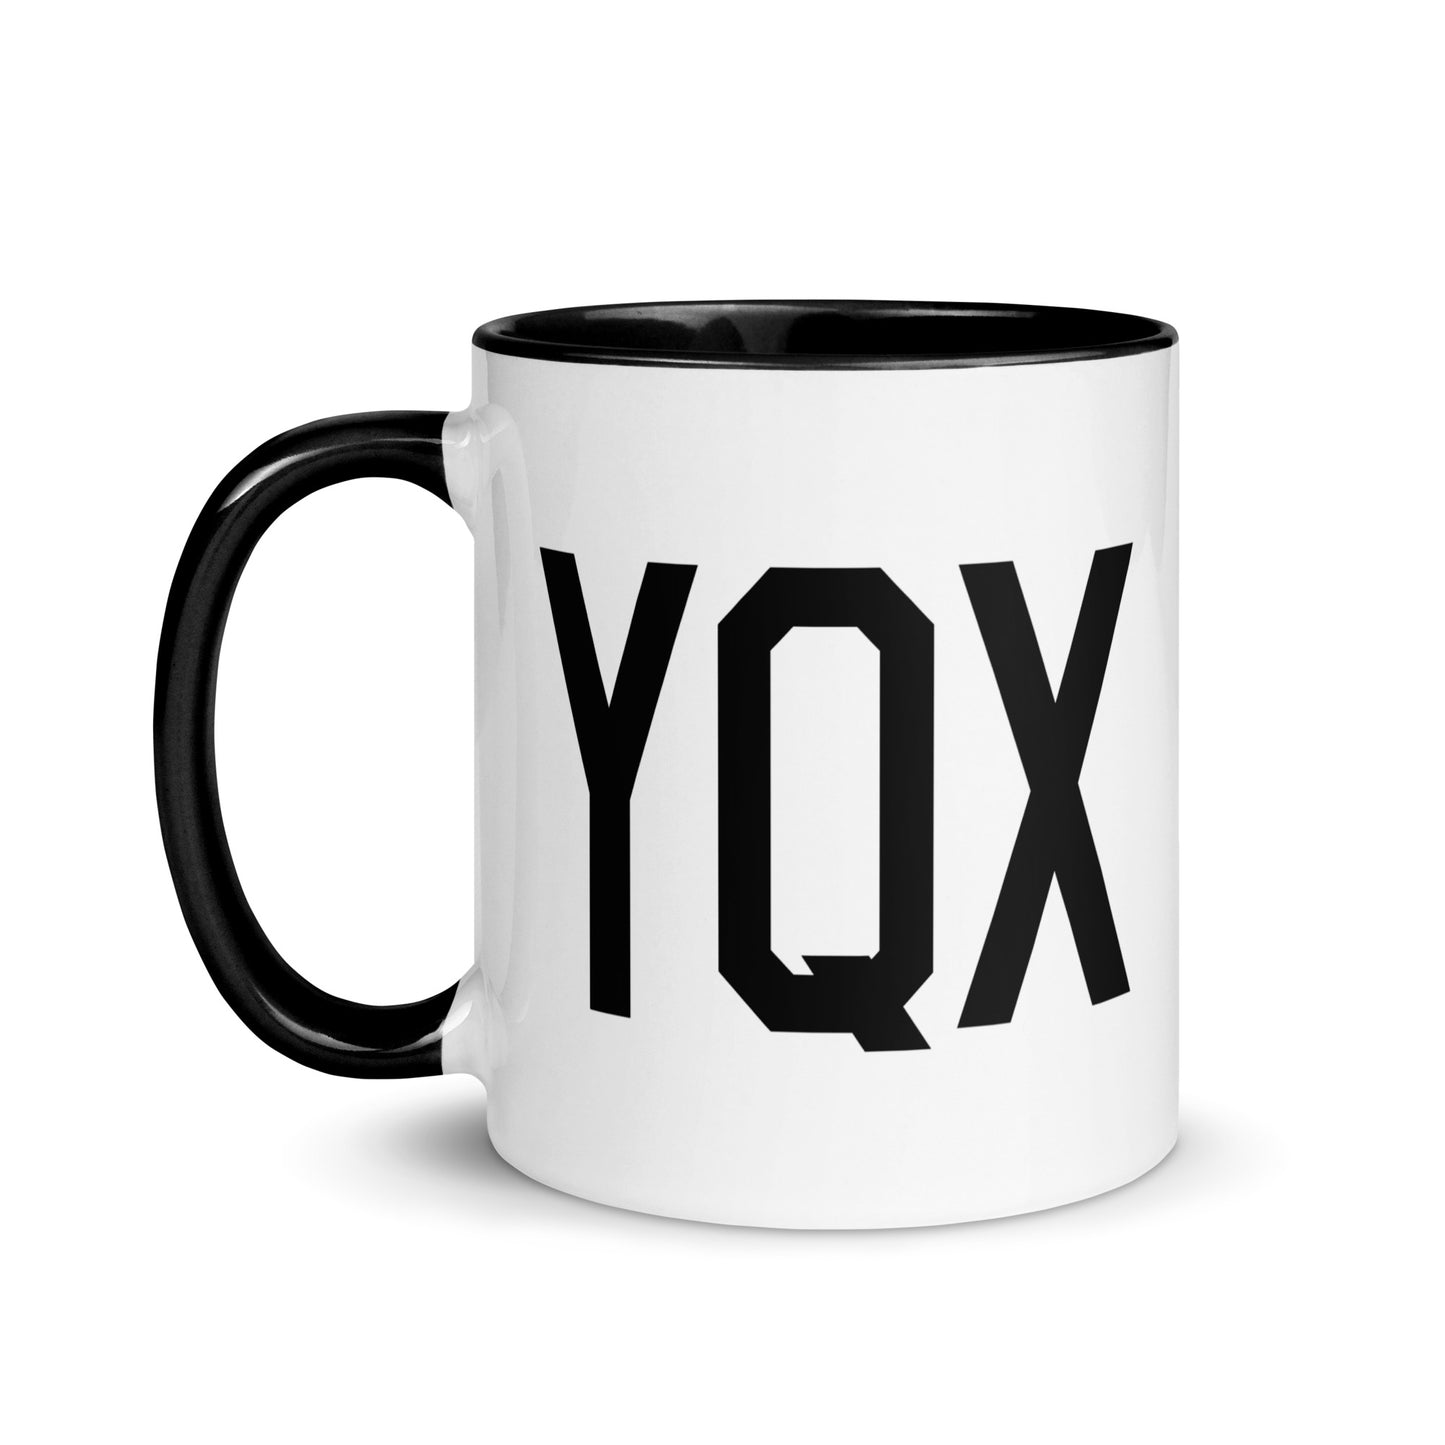 Aviation-Theme Coffee Mug - Black • YQX Gander • YHM Designs - Image 03